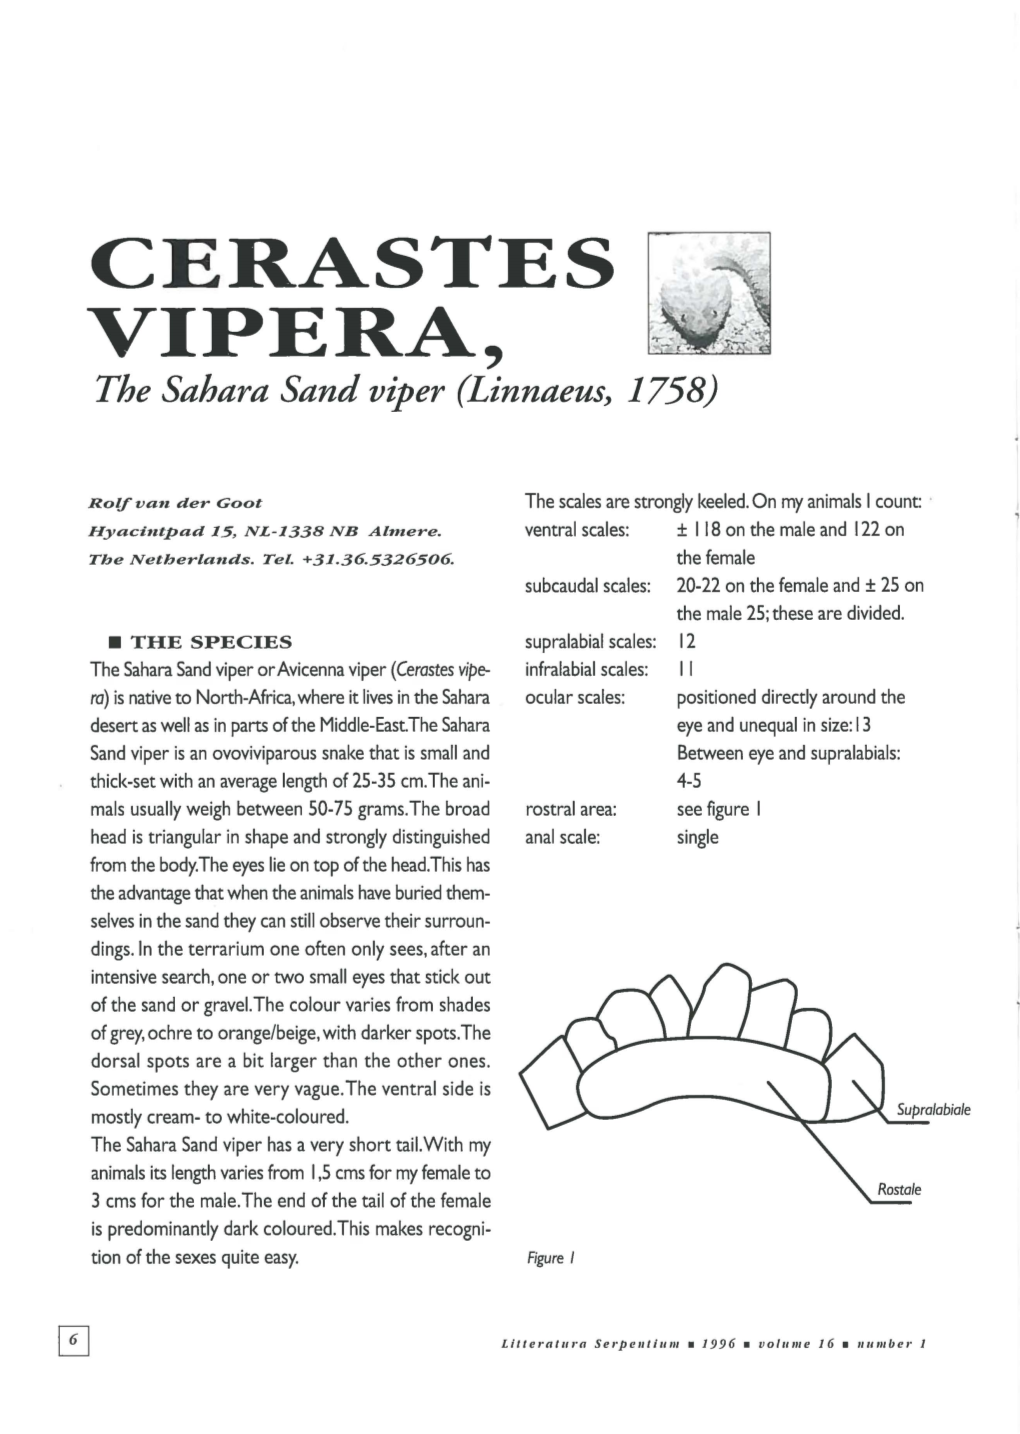 CERASTES VIPERA, the Sahara Sand Viper (Linnaeus, 1758)